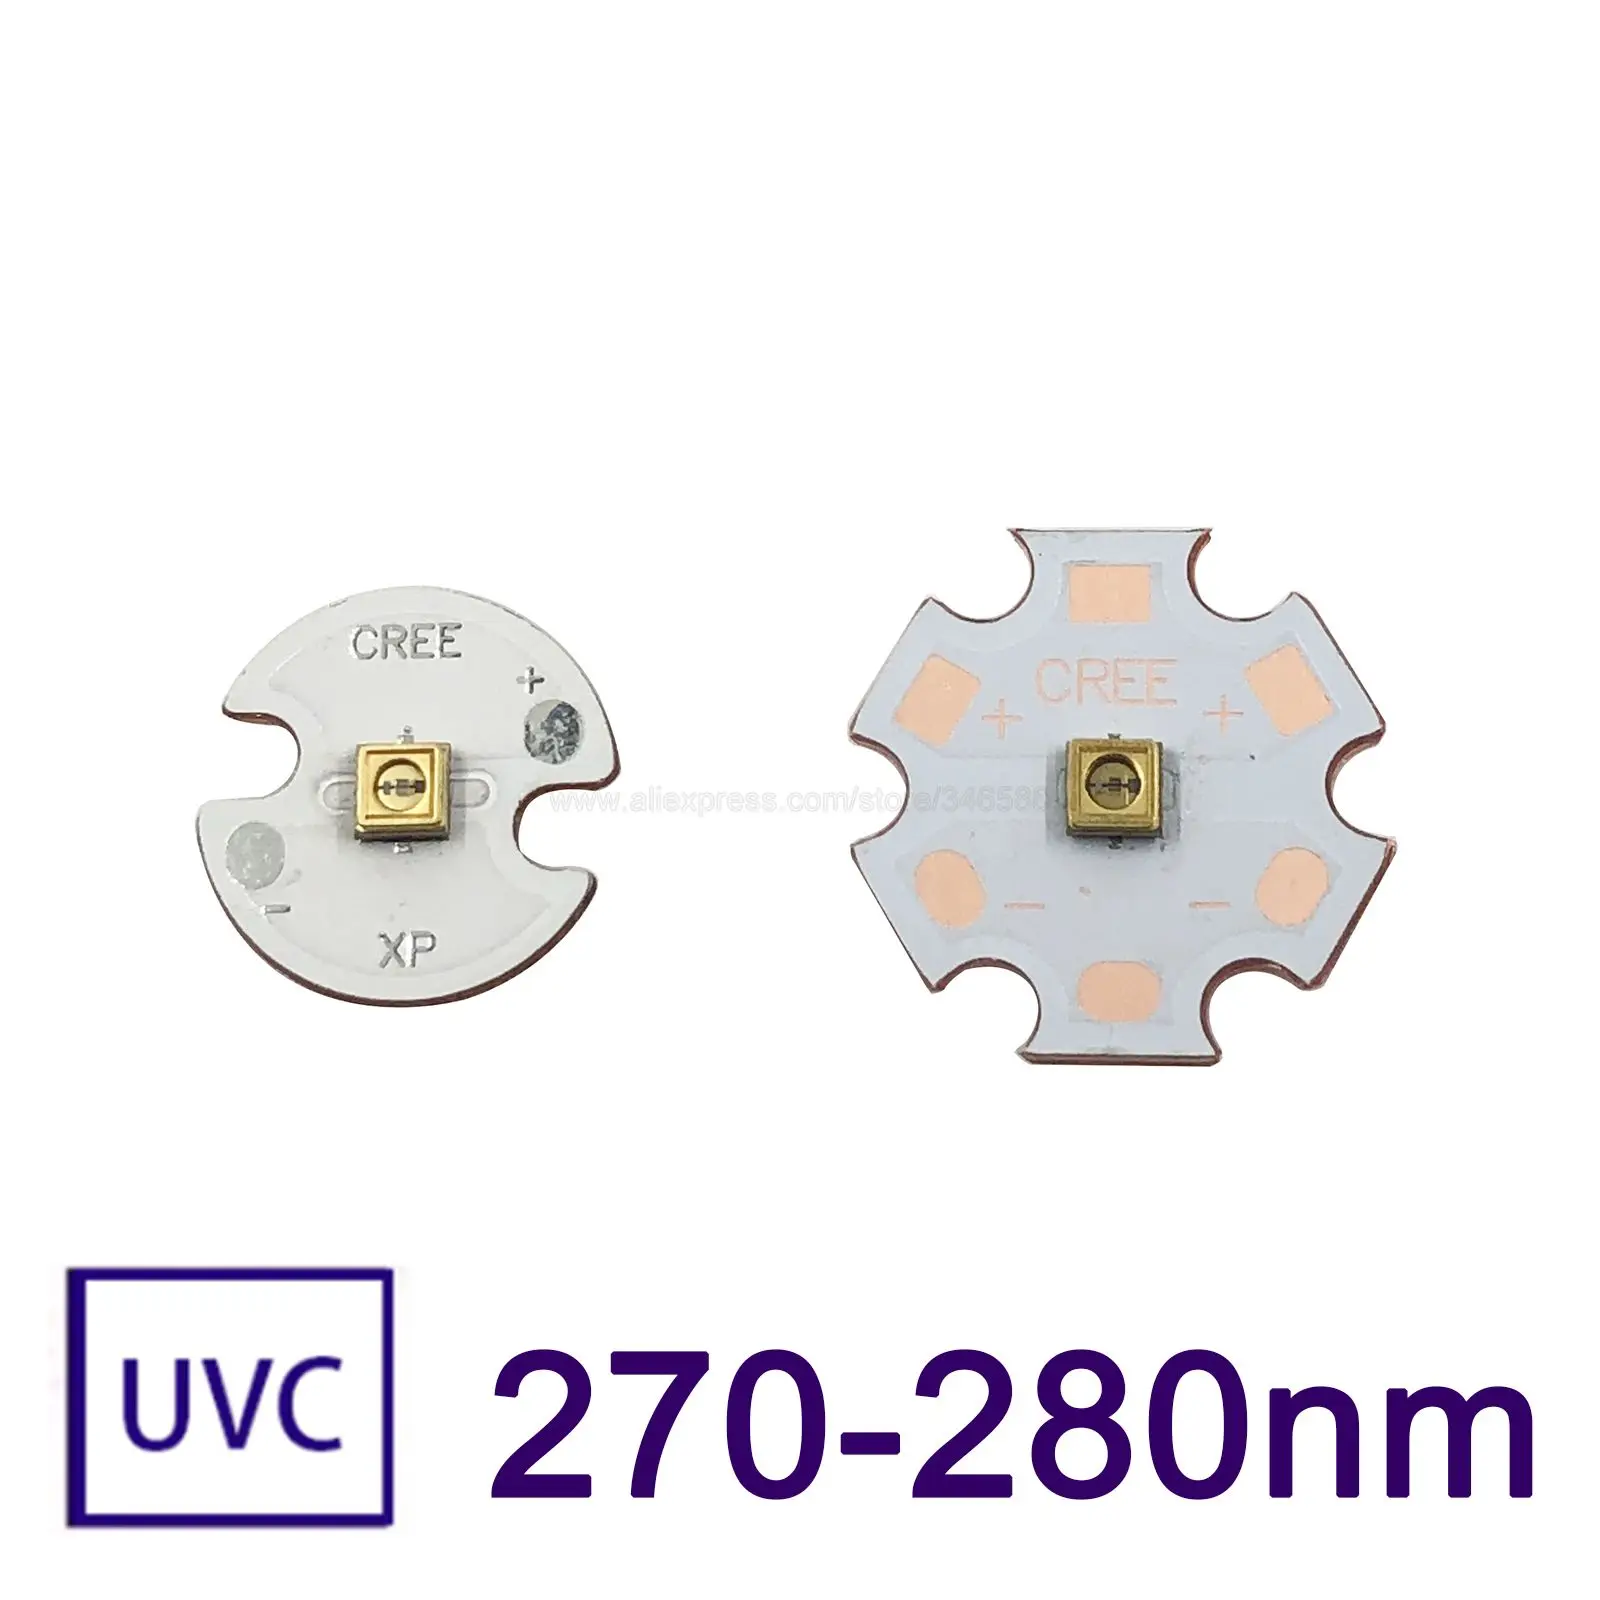 

10PCS UVC LED Diode 3535 Chip 275nm SMD UVC LED Lamp Beads 270nm 280nm Deep Violet Ultraviolet 6V for UV Disinfection Equipment